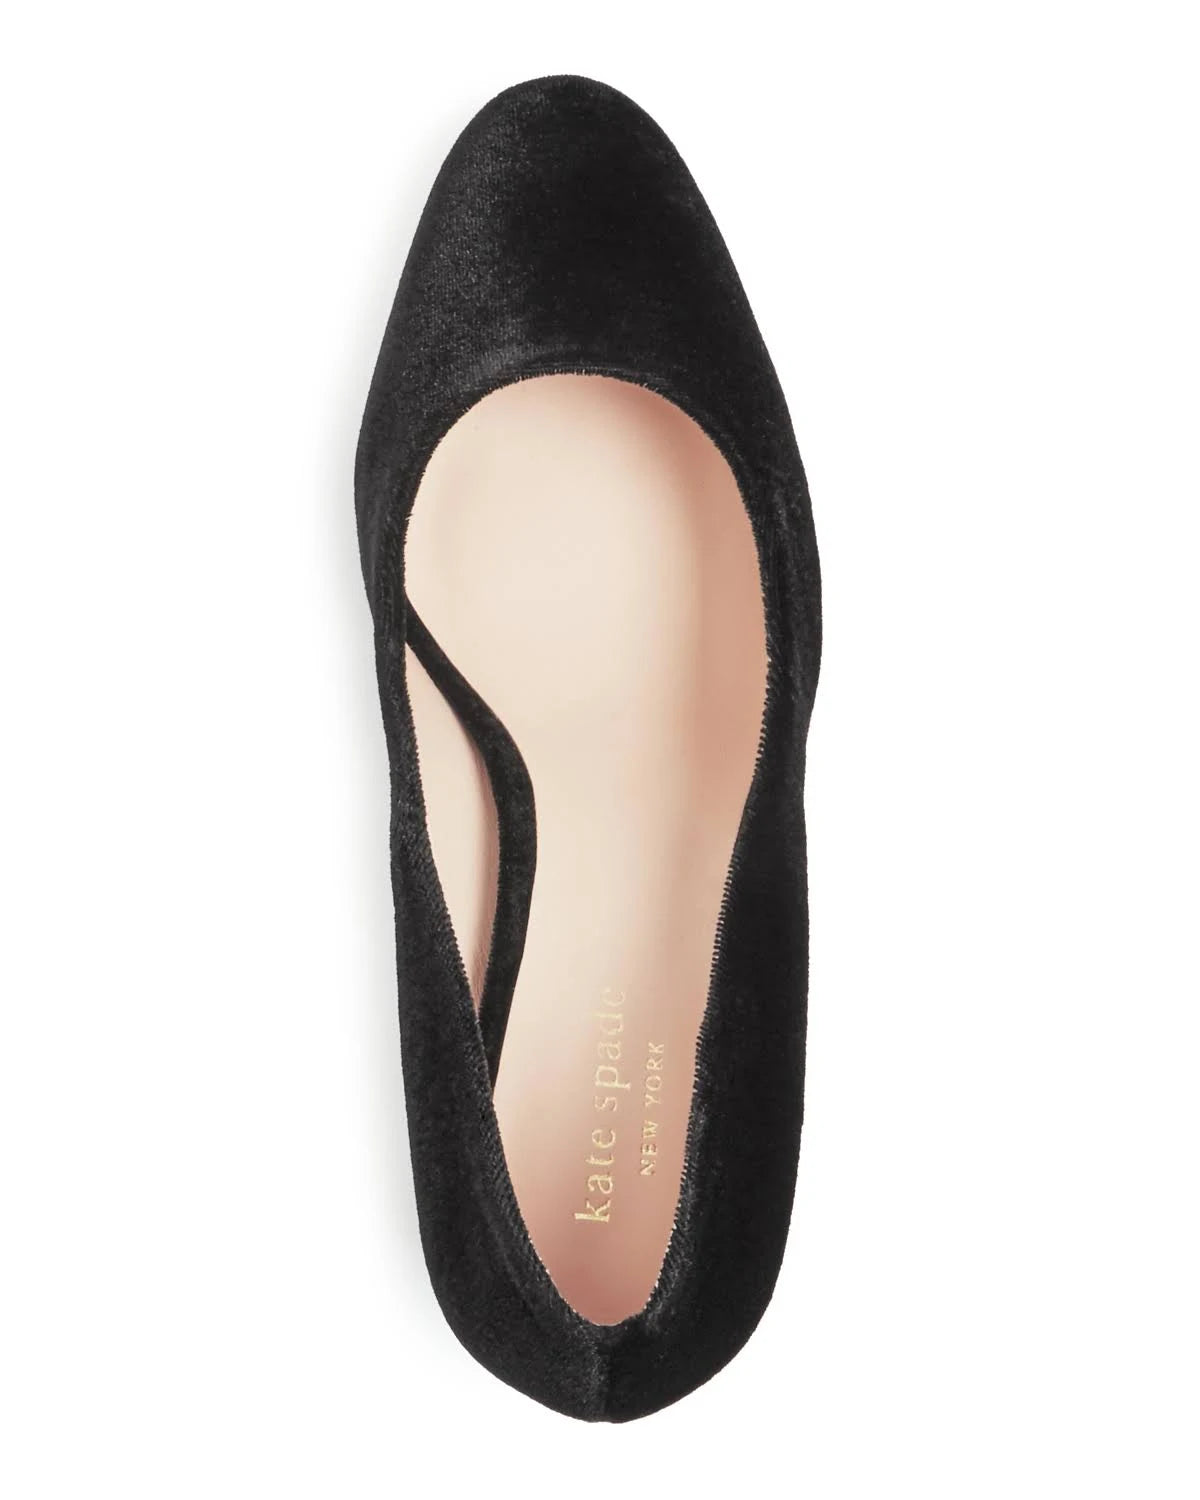 Kate Spade New York Women's Sybil Gem Block-Heel Pumps Size 7.5